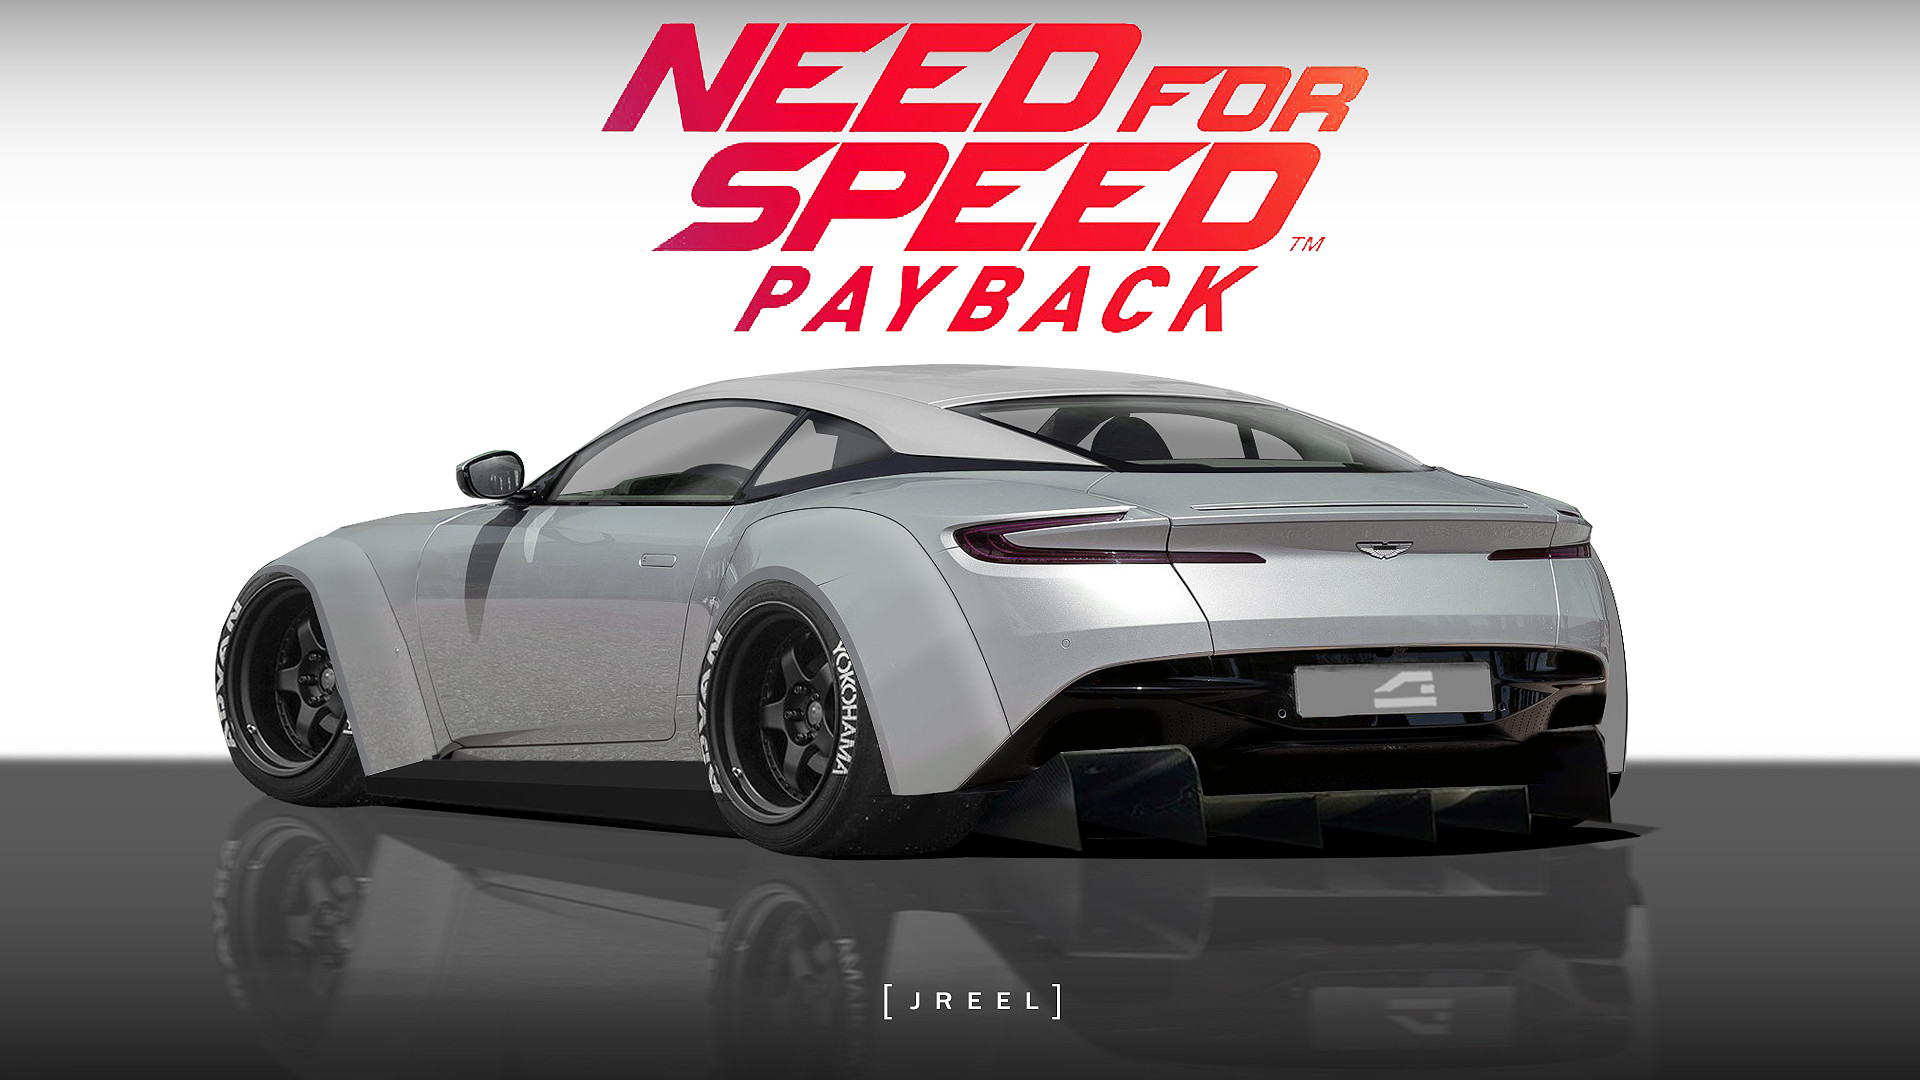 Baixe gratuitamente a imagem Aston Martin, Aston Martin Db11, Videogame, Need For Speed: Payback na área de trabalho do seu PC